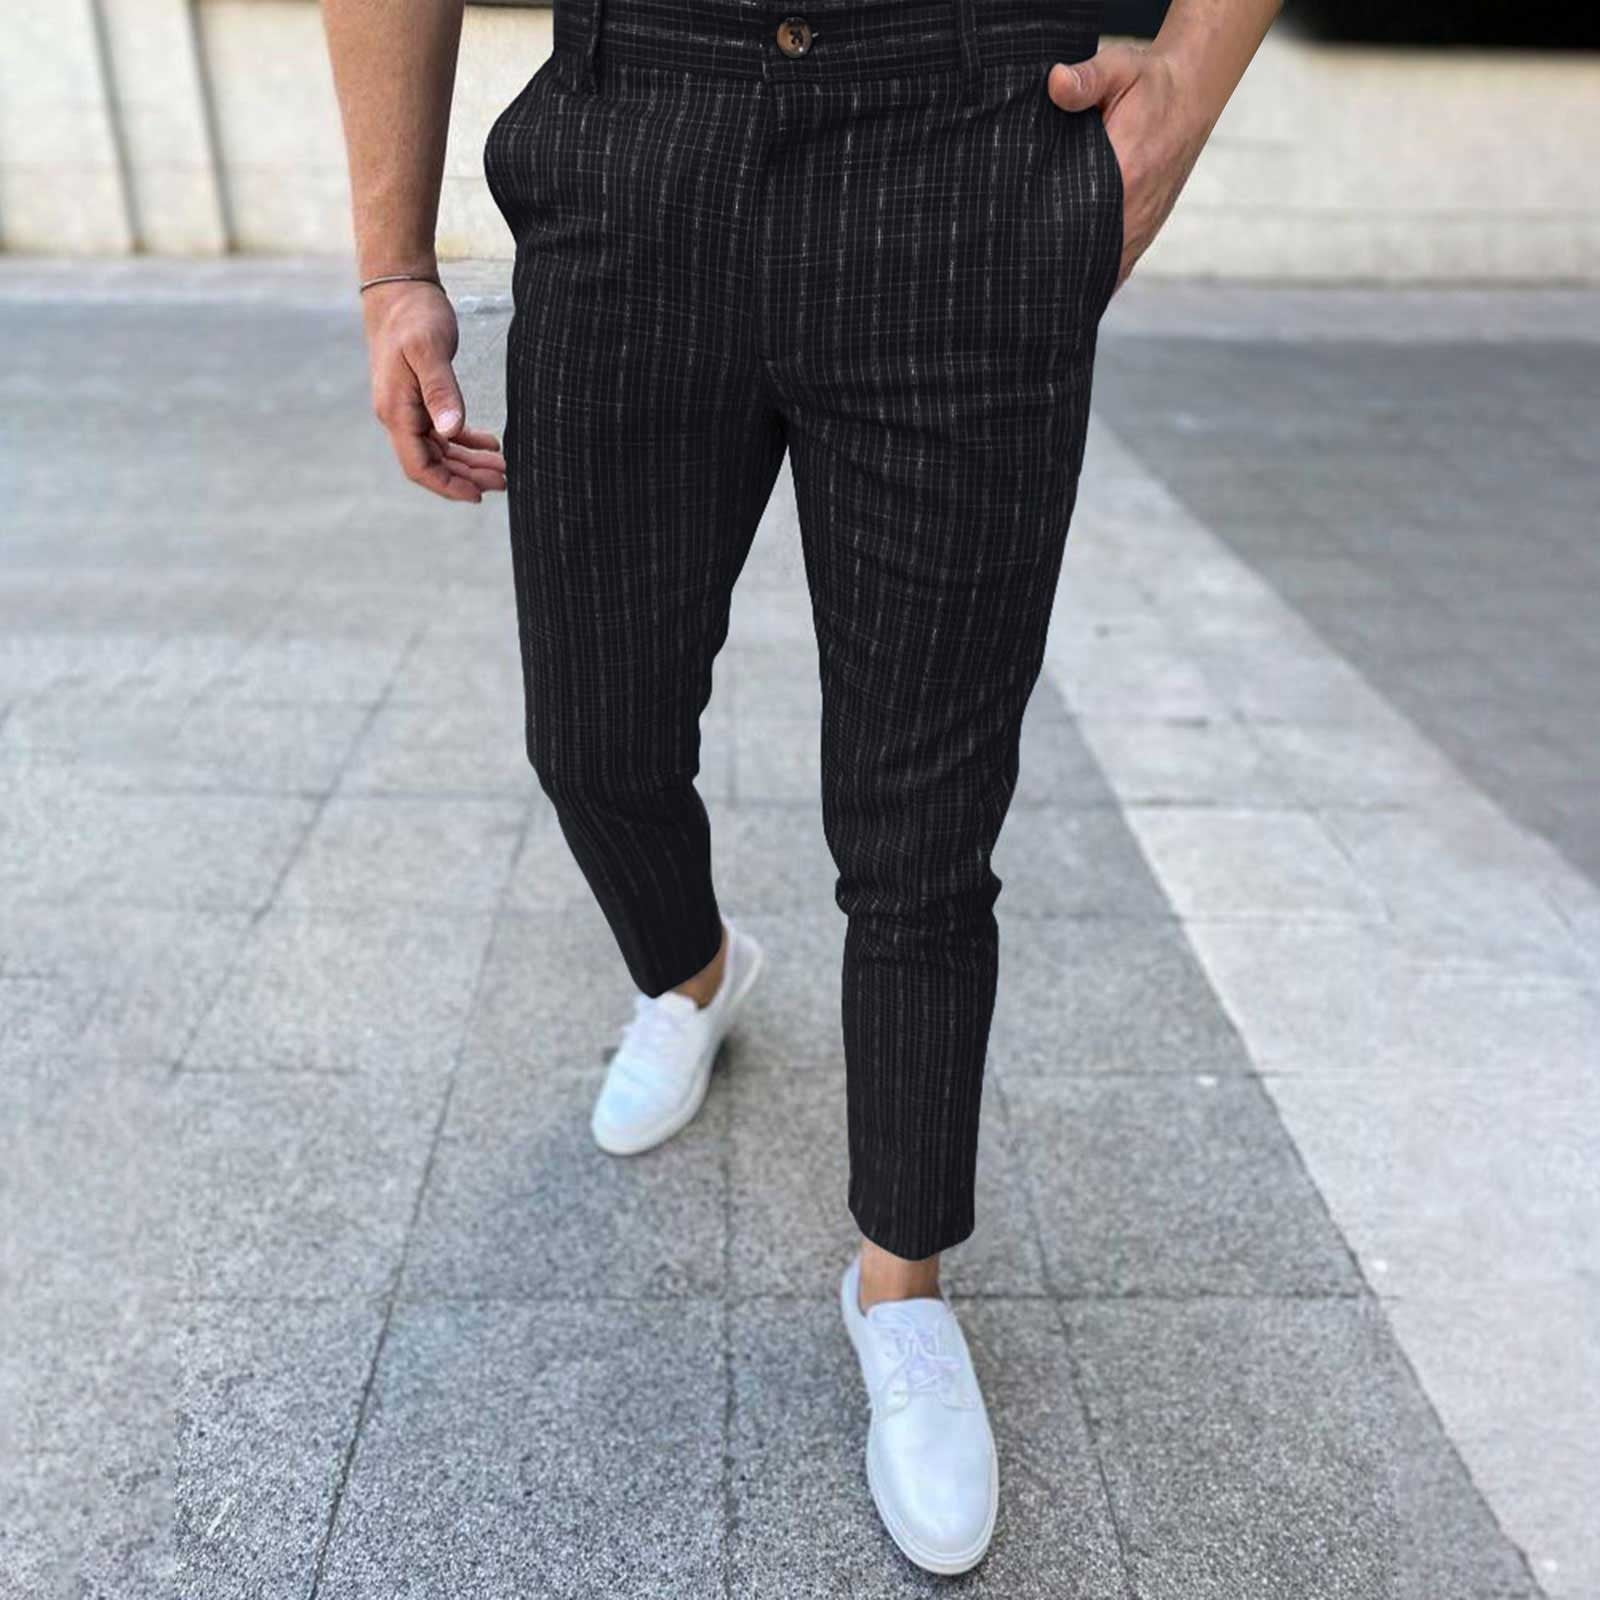 Men Pants office khaki |Casual Men formal pants| Men Party pant SAINLY